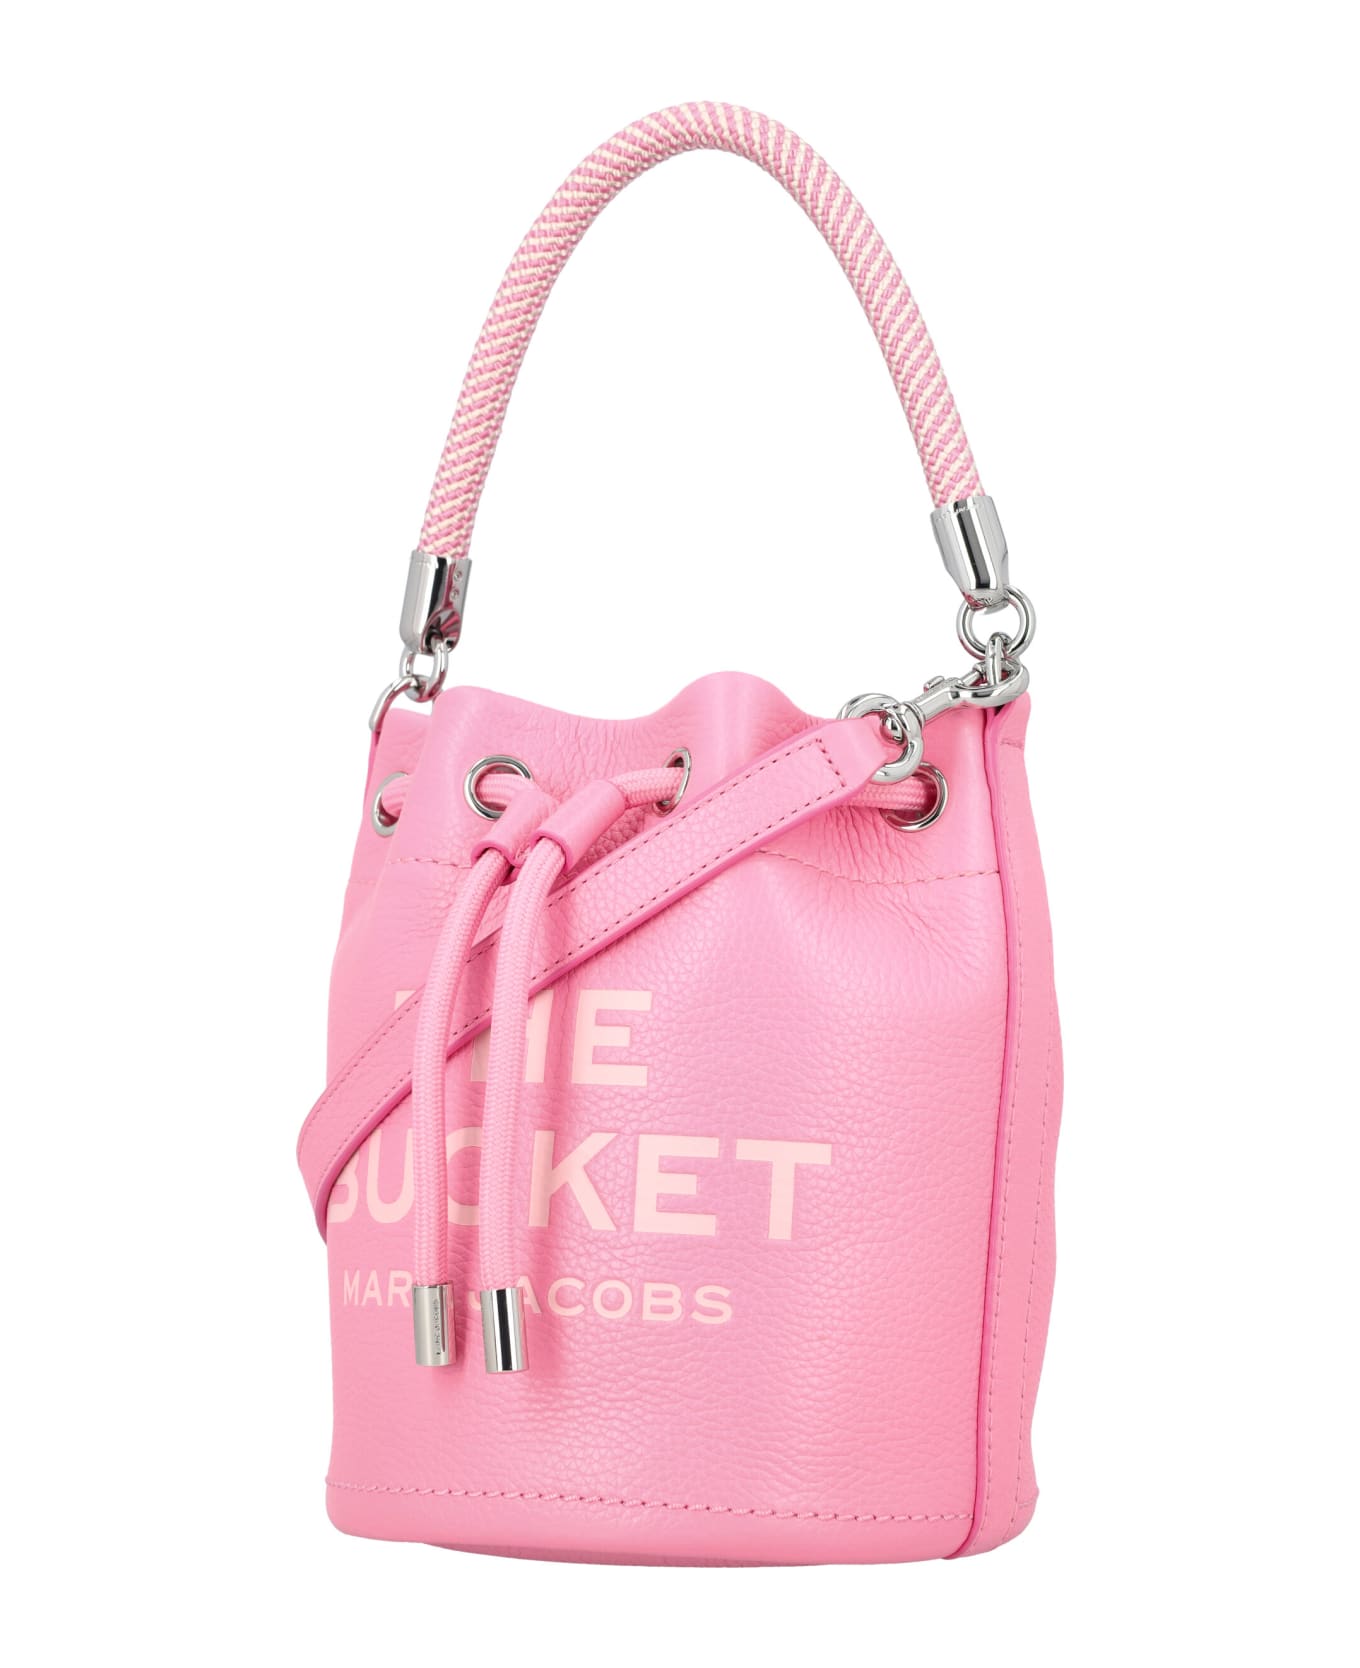 Marc Jacobs The Bucket Bag - PETAL PINK トートバッグ